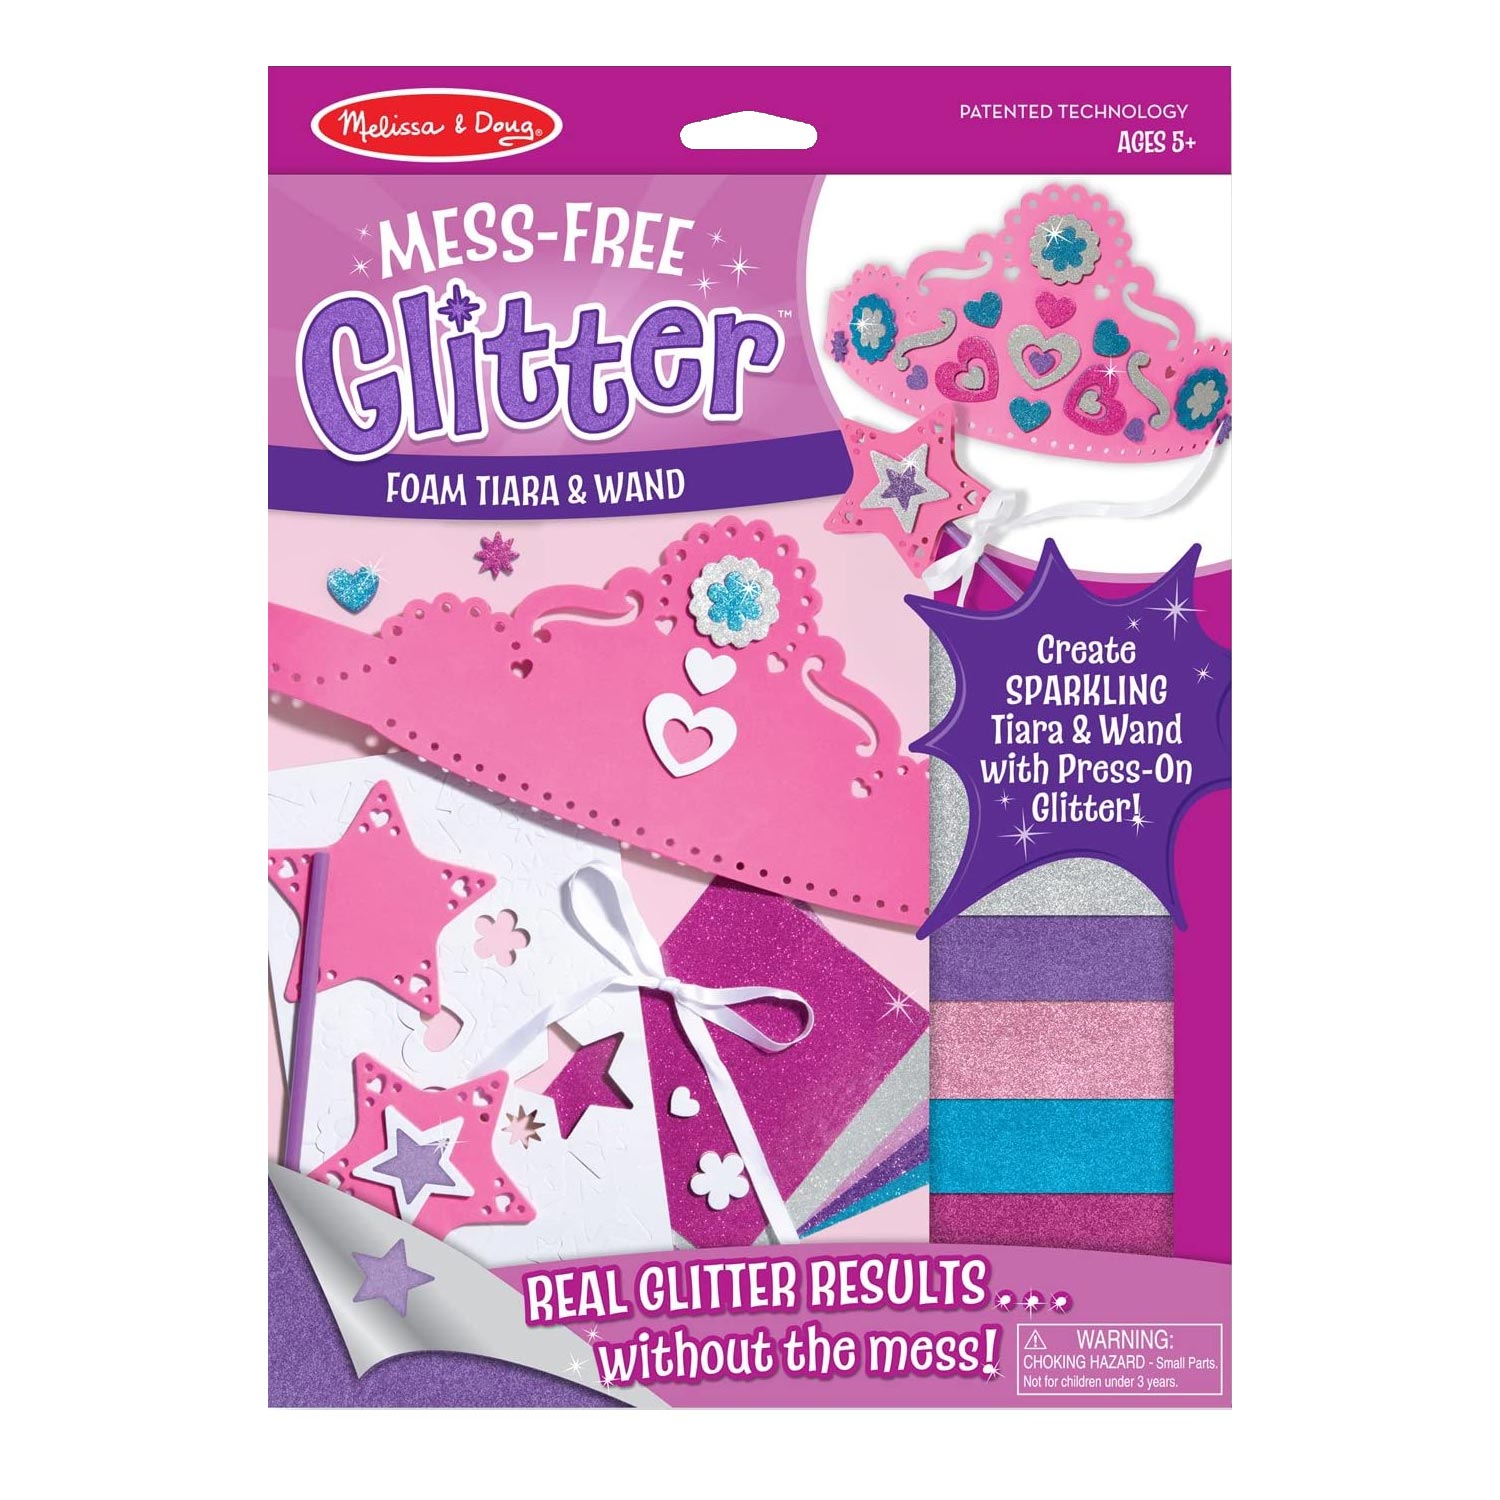 Mess-Free Glitter Foam Tiara & Wand: Rebecca's Toys & Prizes